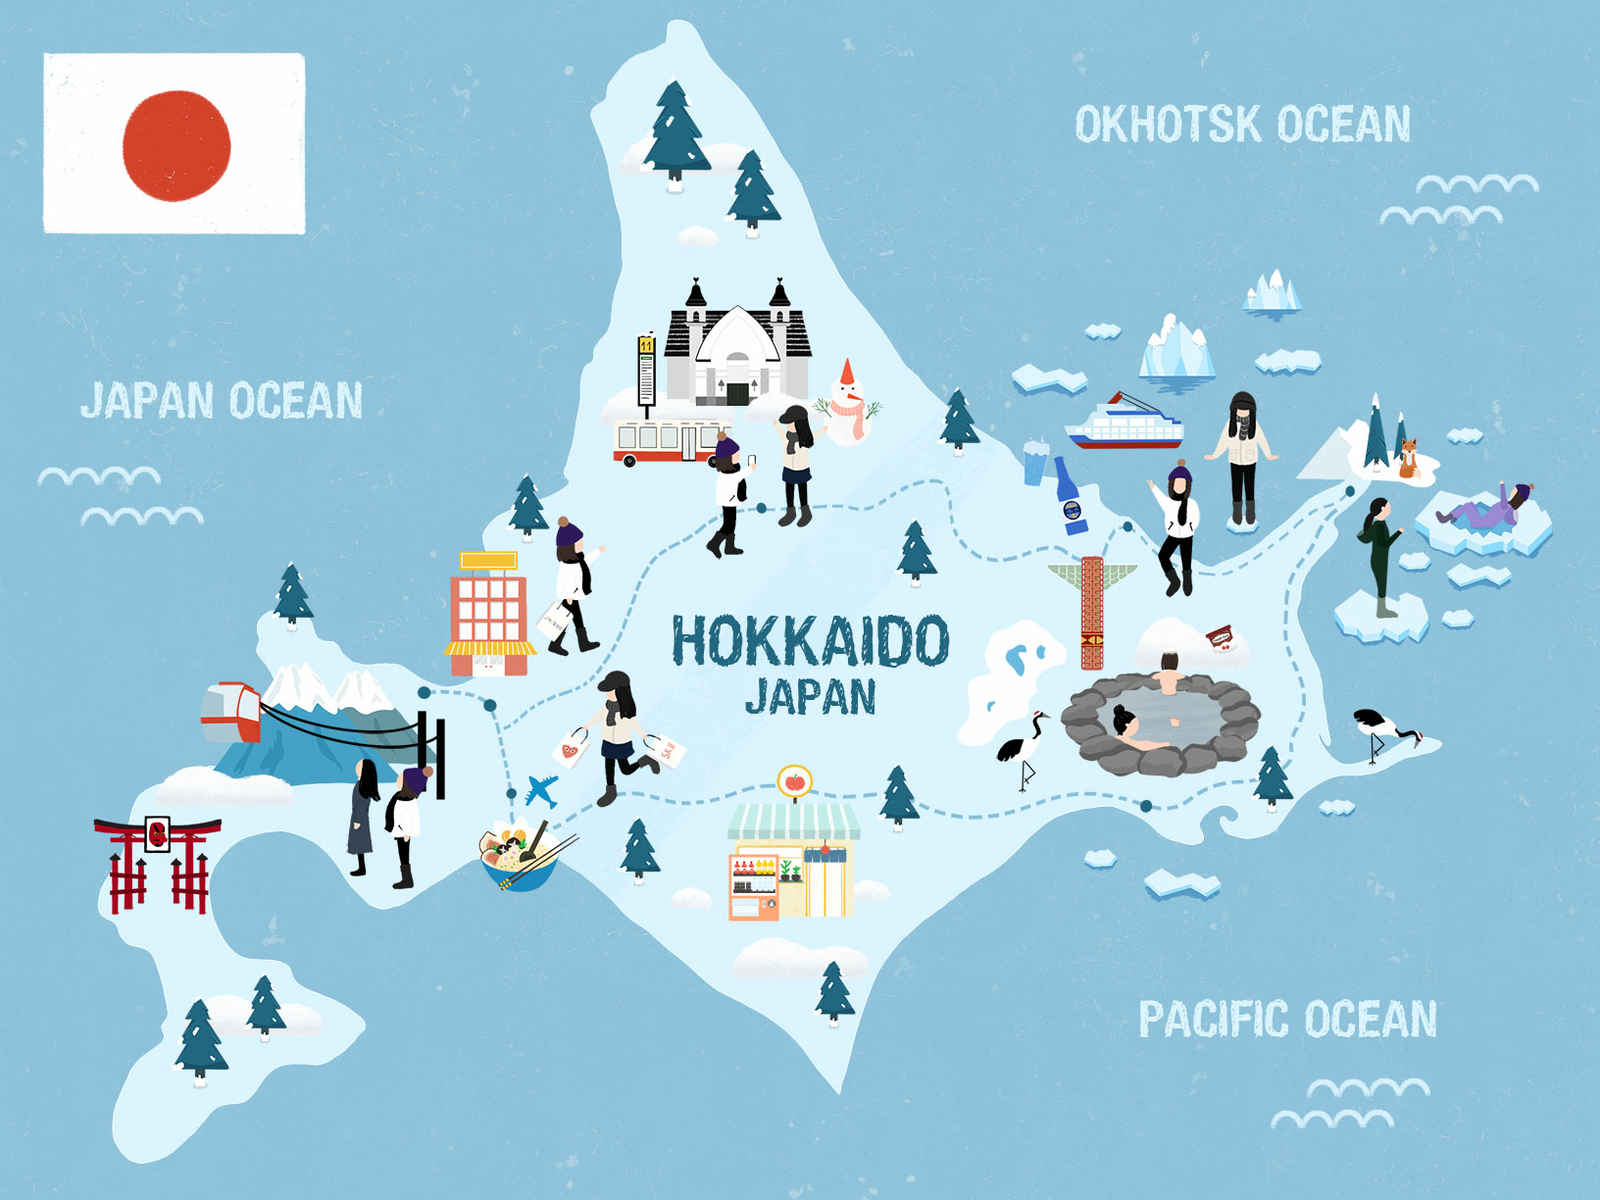 Hokkaido map illustration by Muo on Dribbble